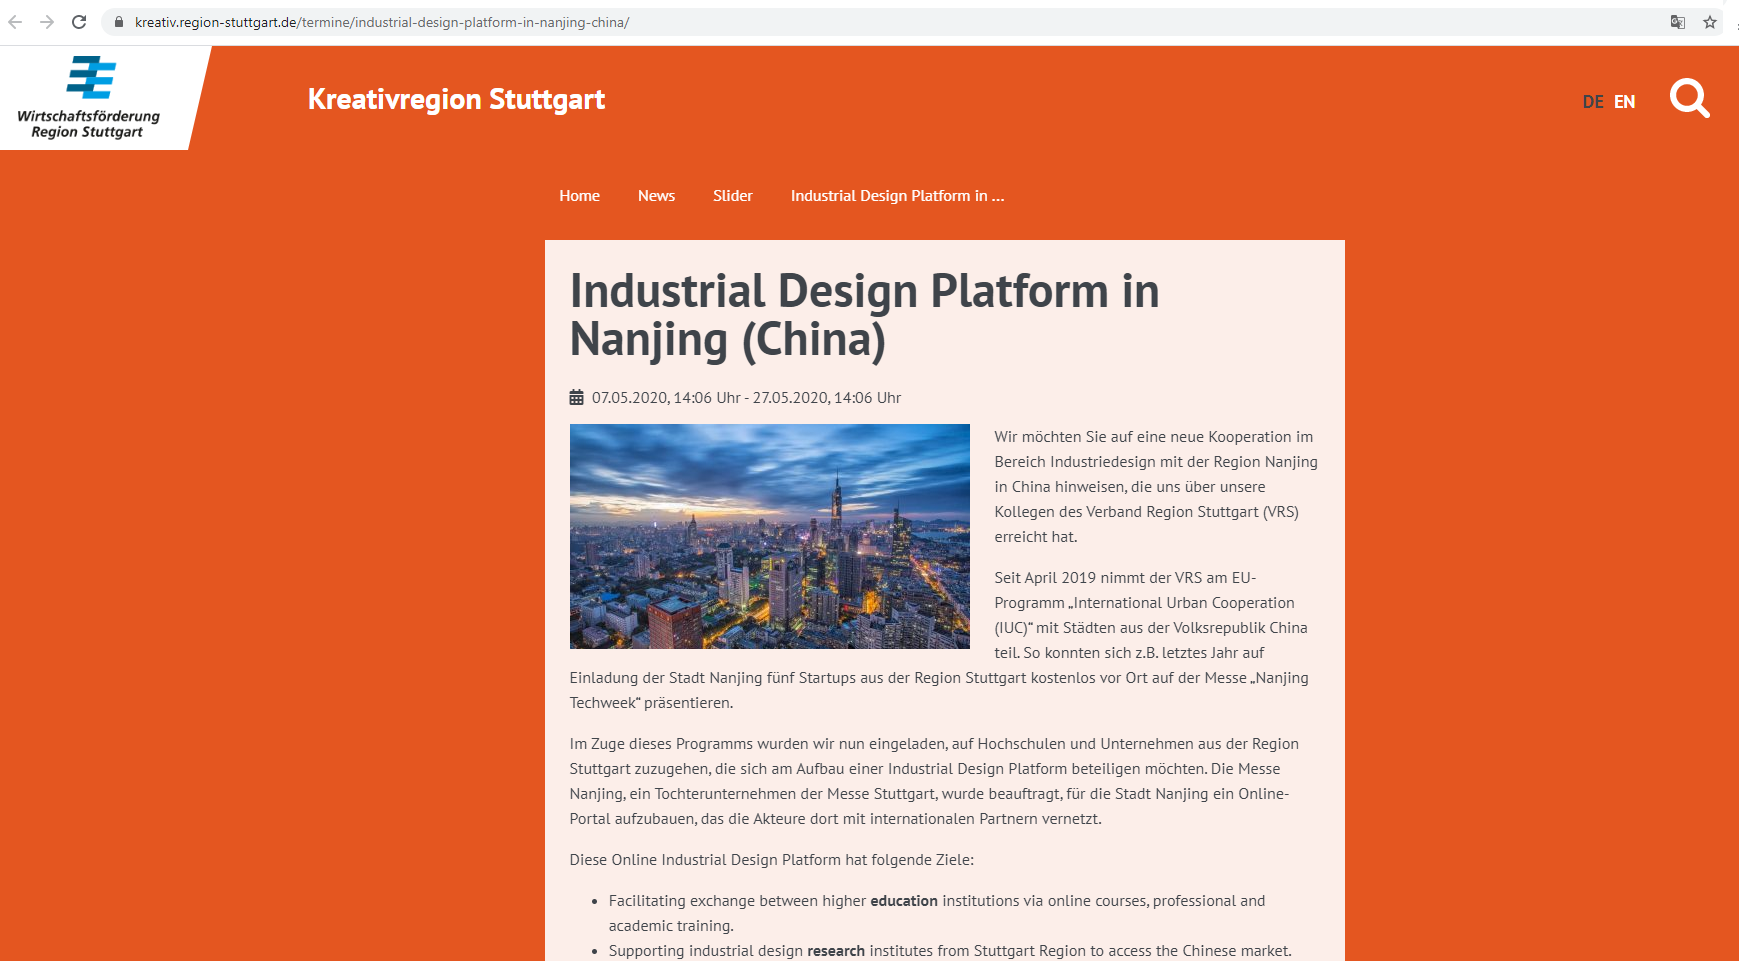 IUC, Nanjing and Stuttgart Pilot Industrial Design Cooperation